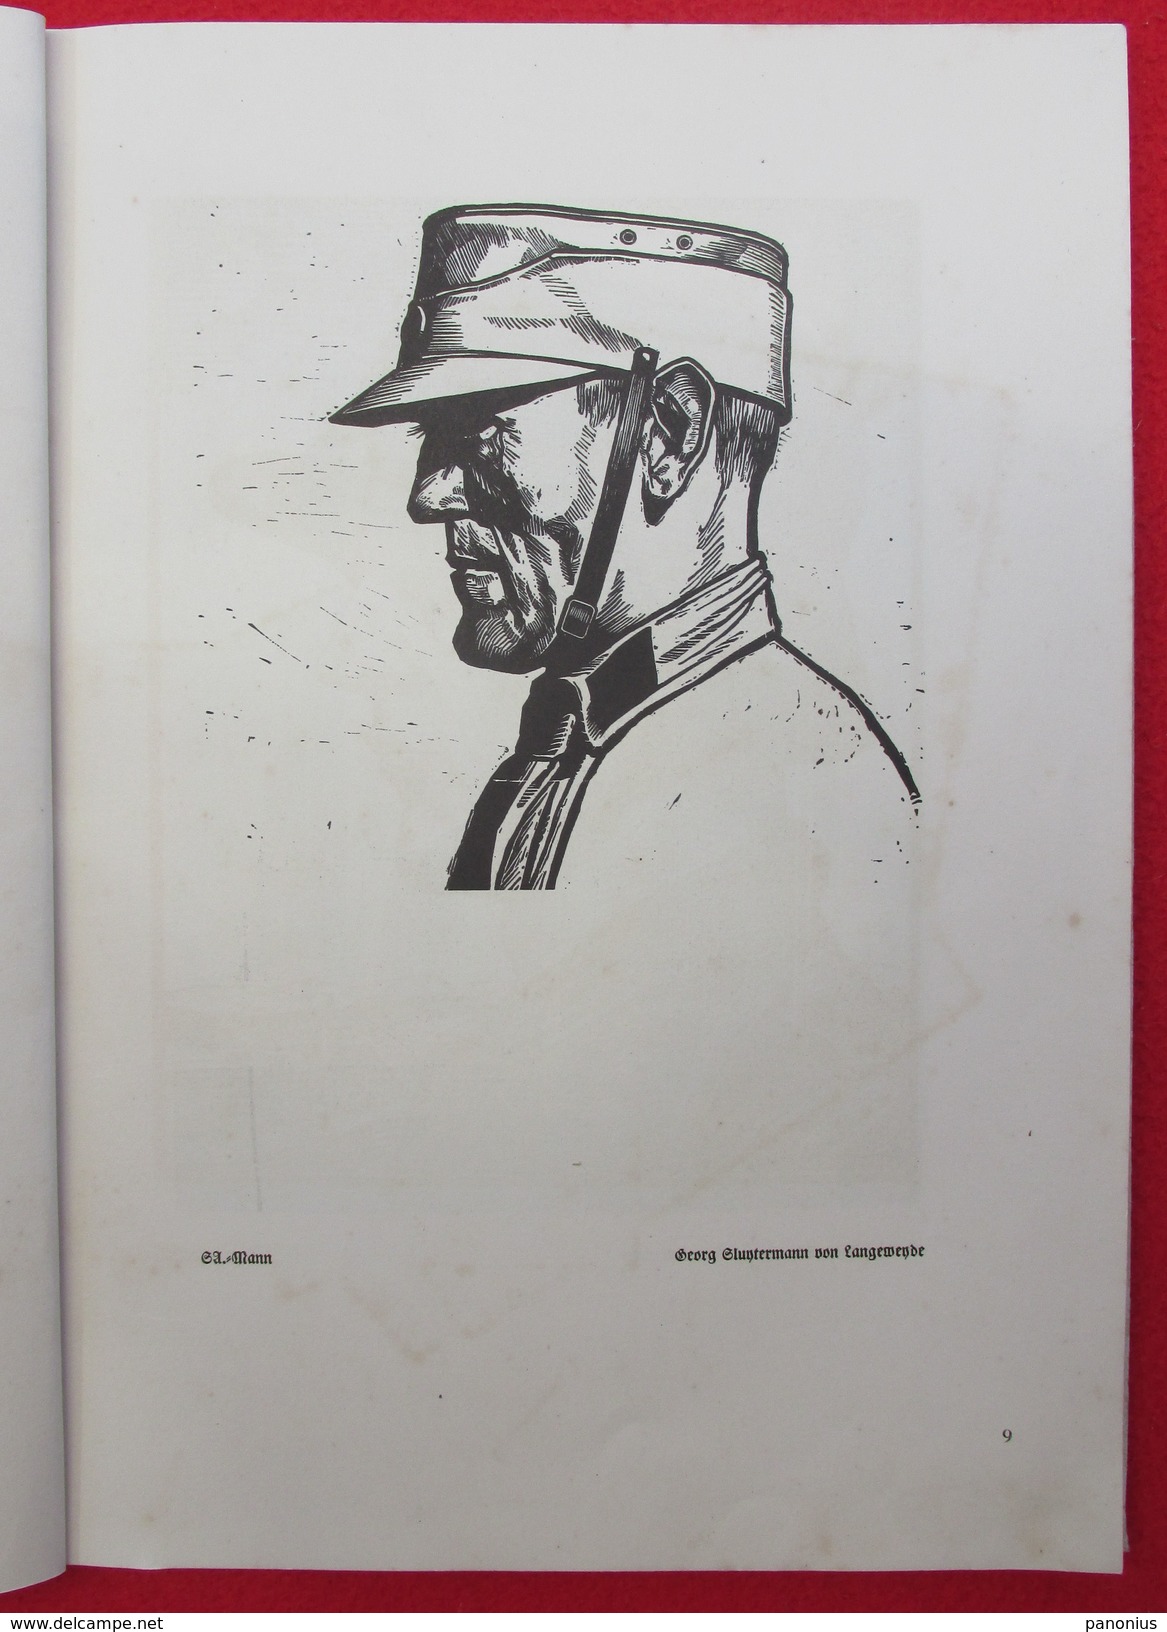 DEUTSCHE GRAPHIK - Art Book, Monograph, Painting, Period III Reich, Berlin, Germany - Graphism & Design